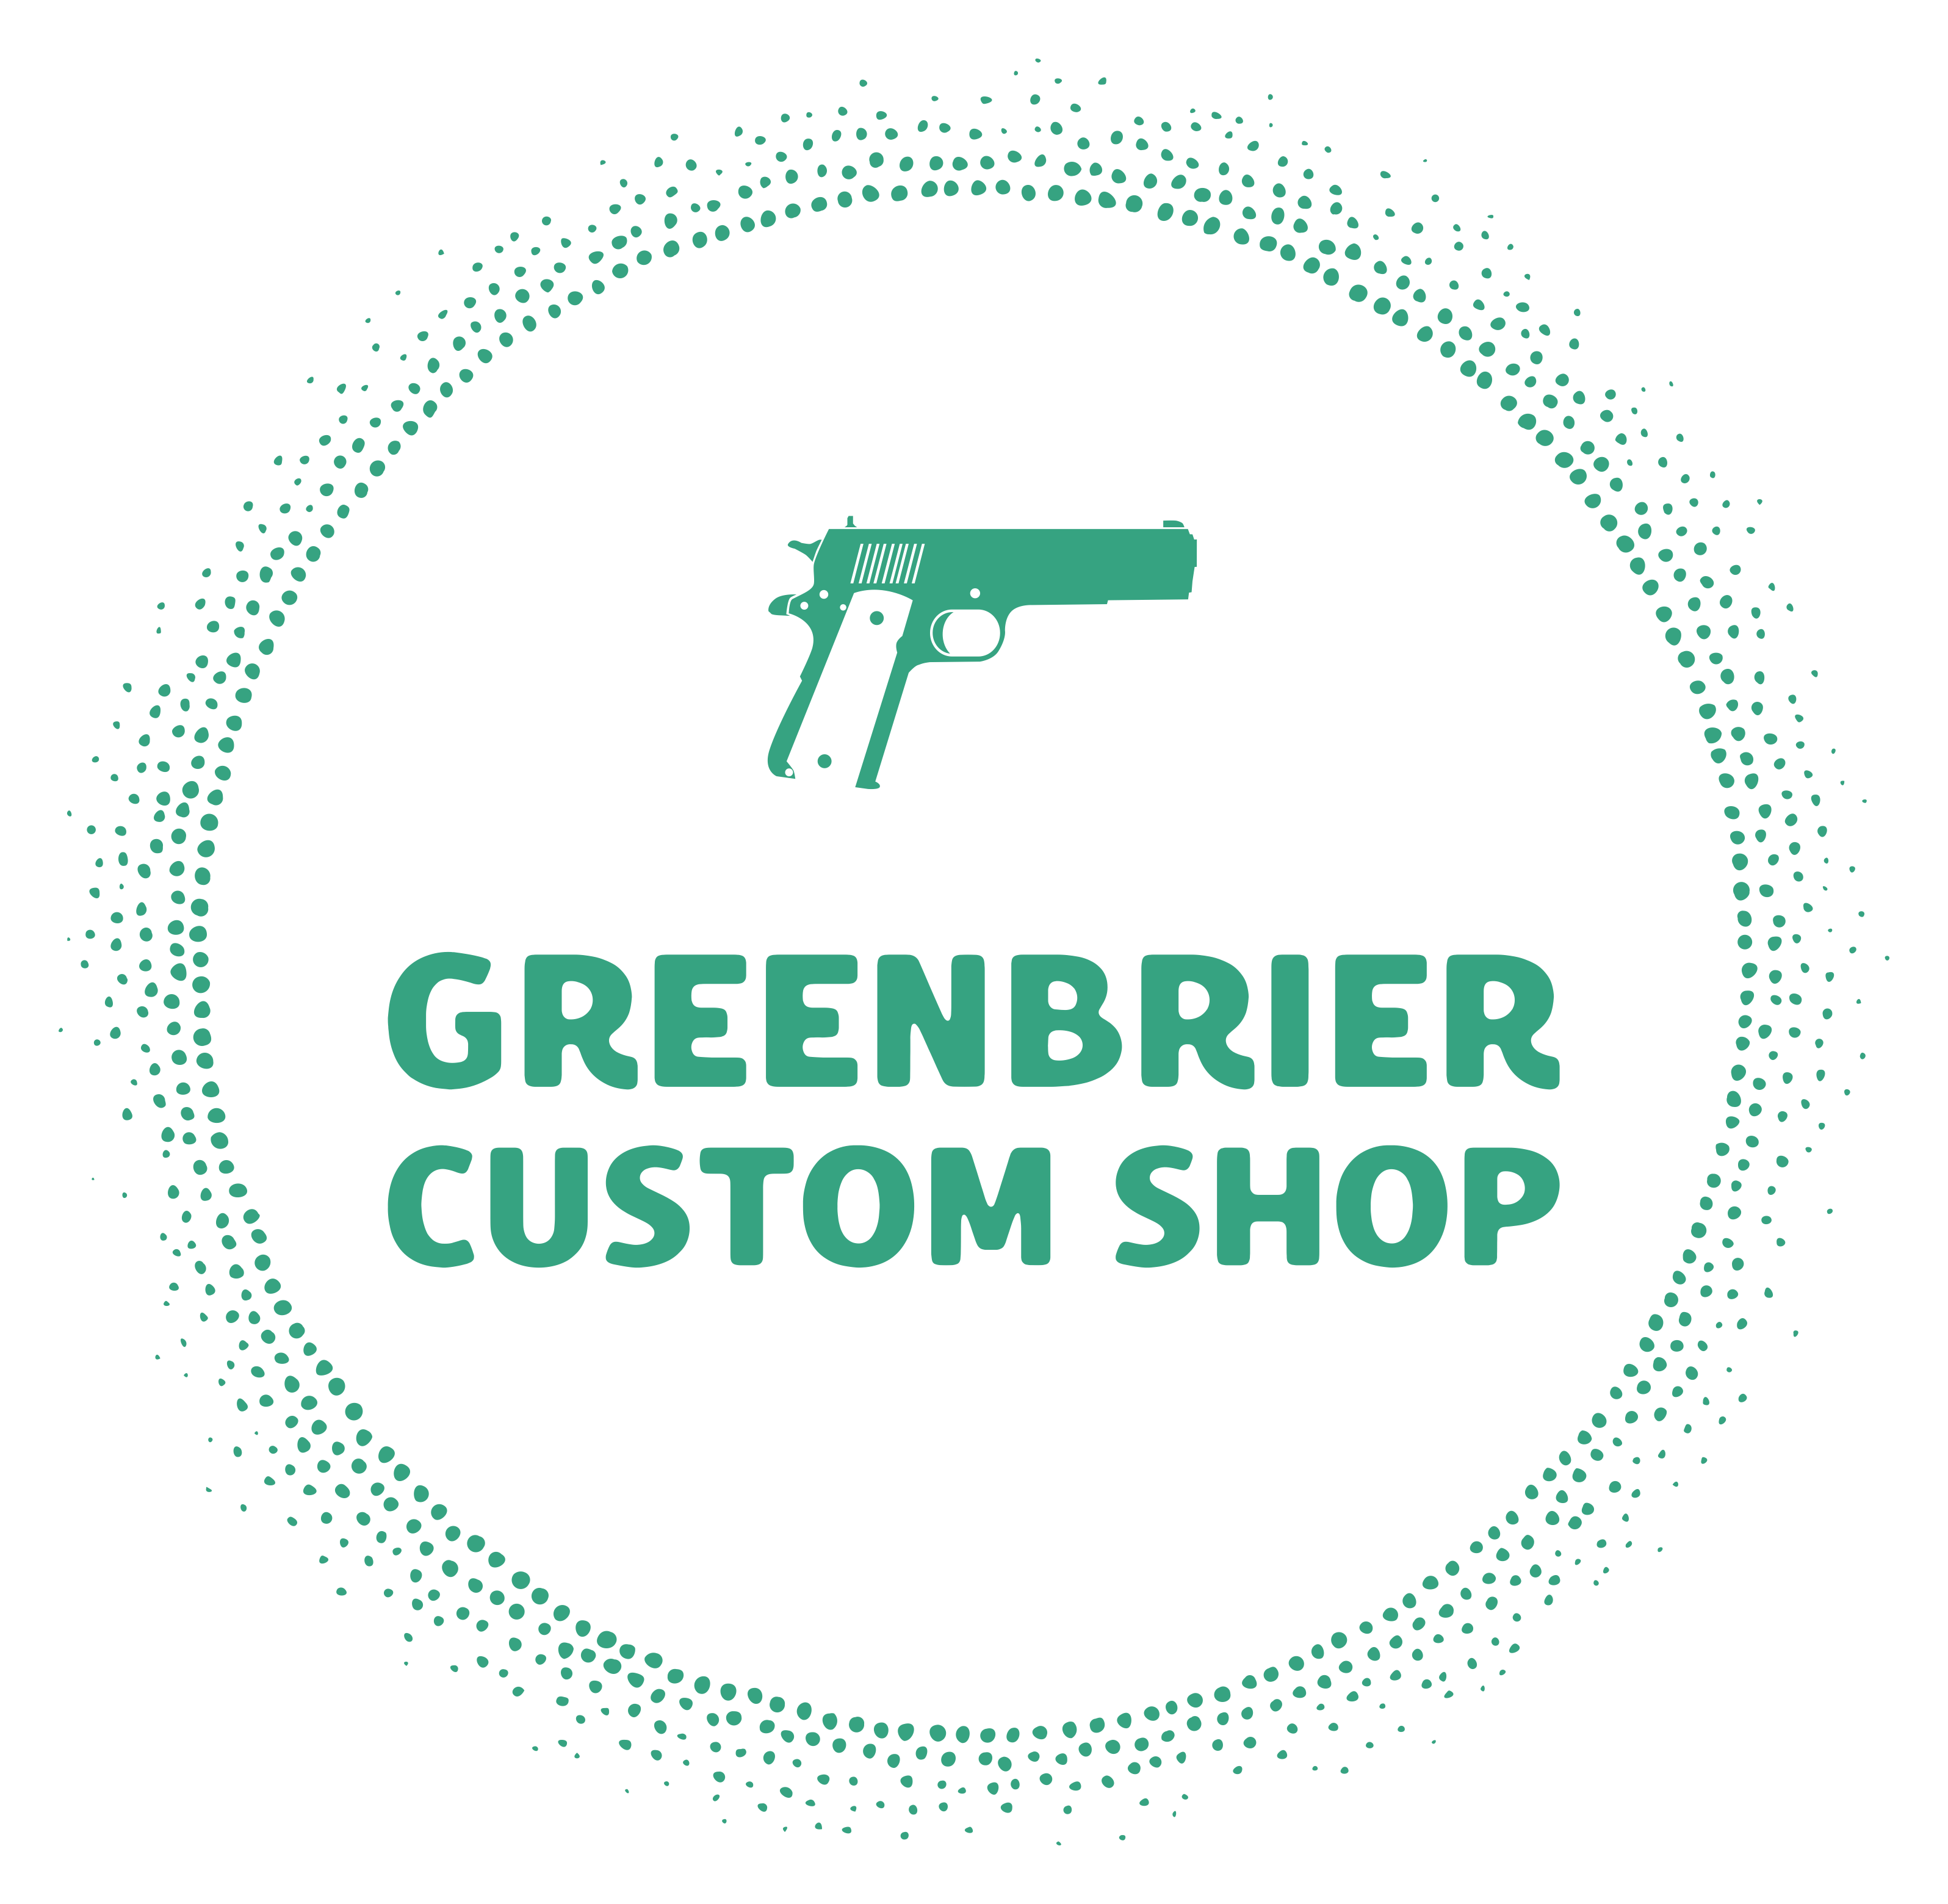 Greenbrier Custom Shop logo